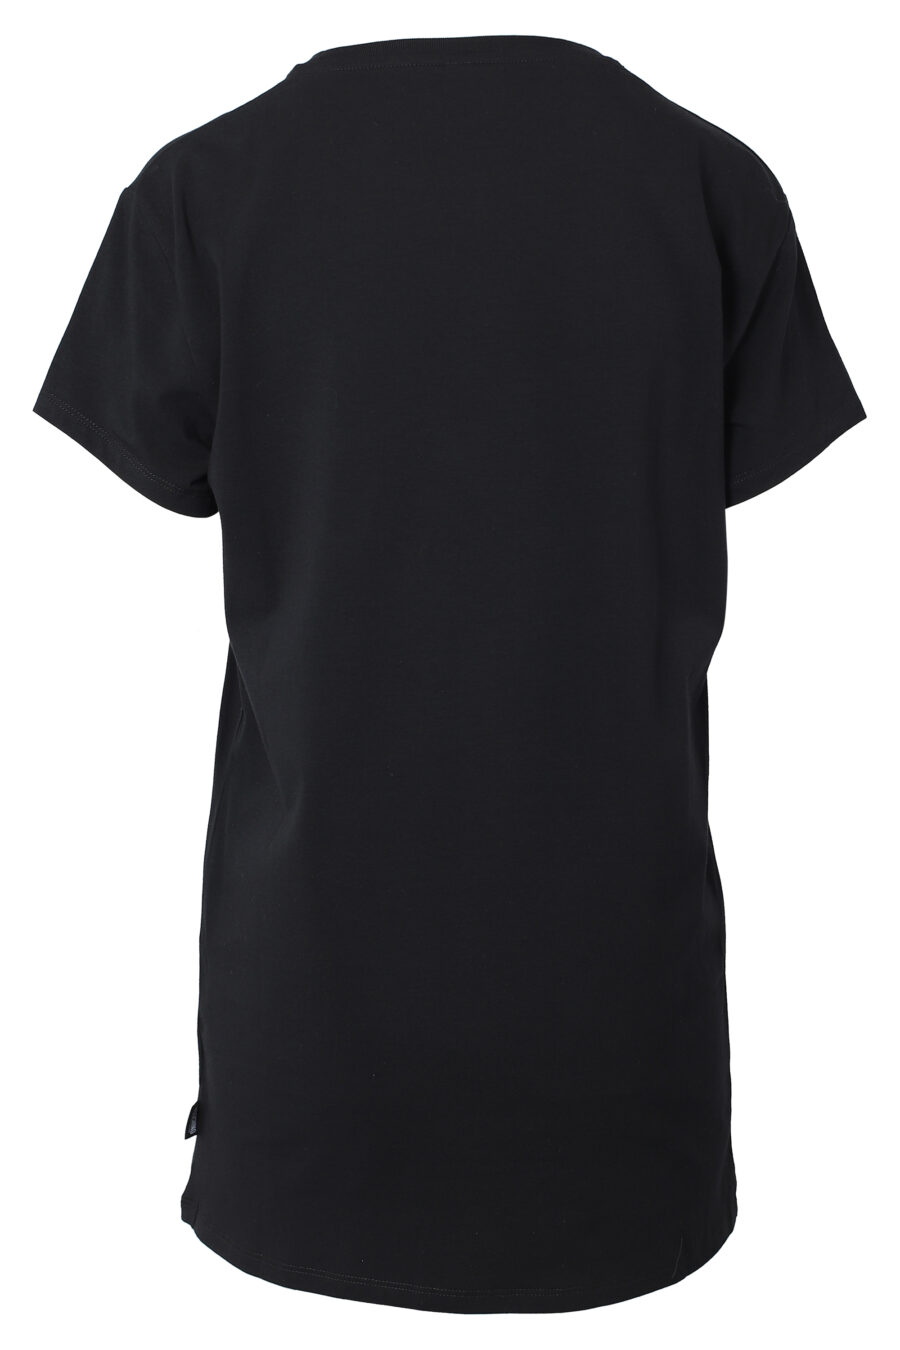 Black maxi t-shirt with mini-logo bear underbear - IMG 9808